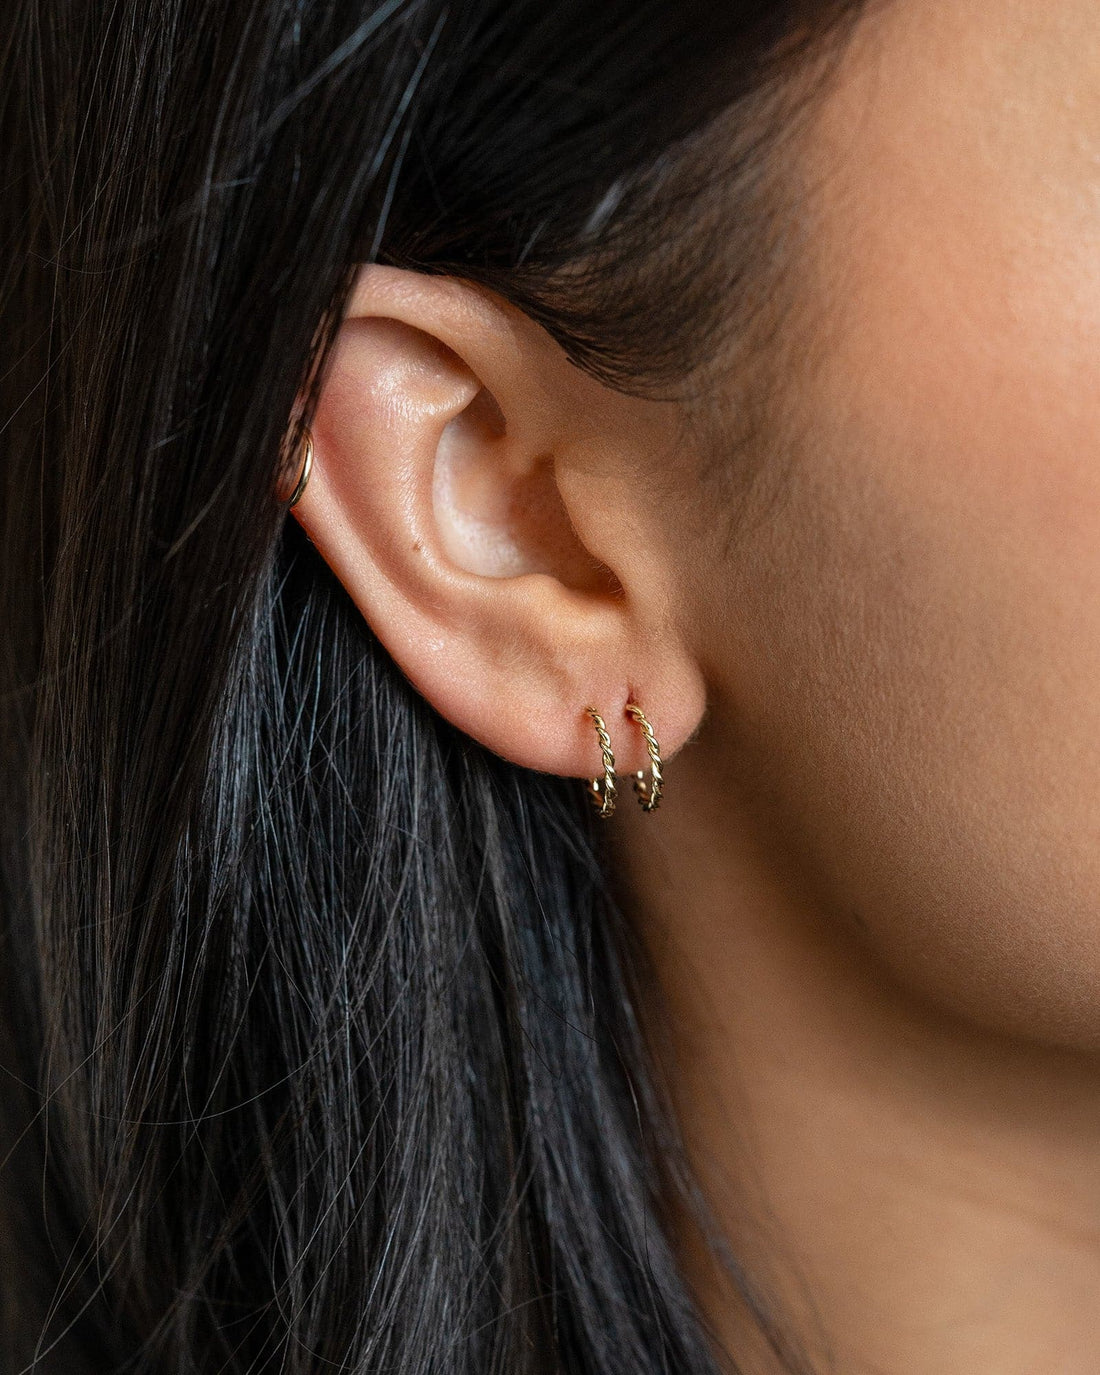 Double Twist Hoop Earrings by Carla | Nancy B. - Skeie's Jewelers